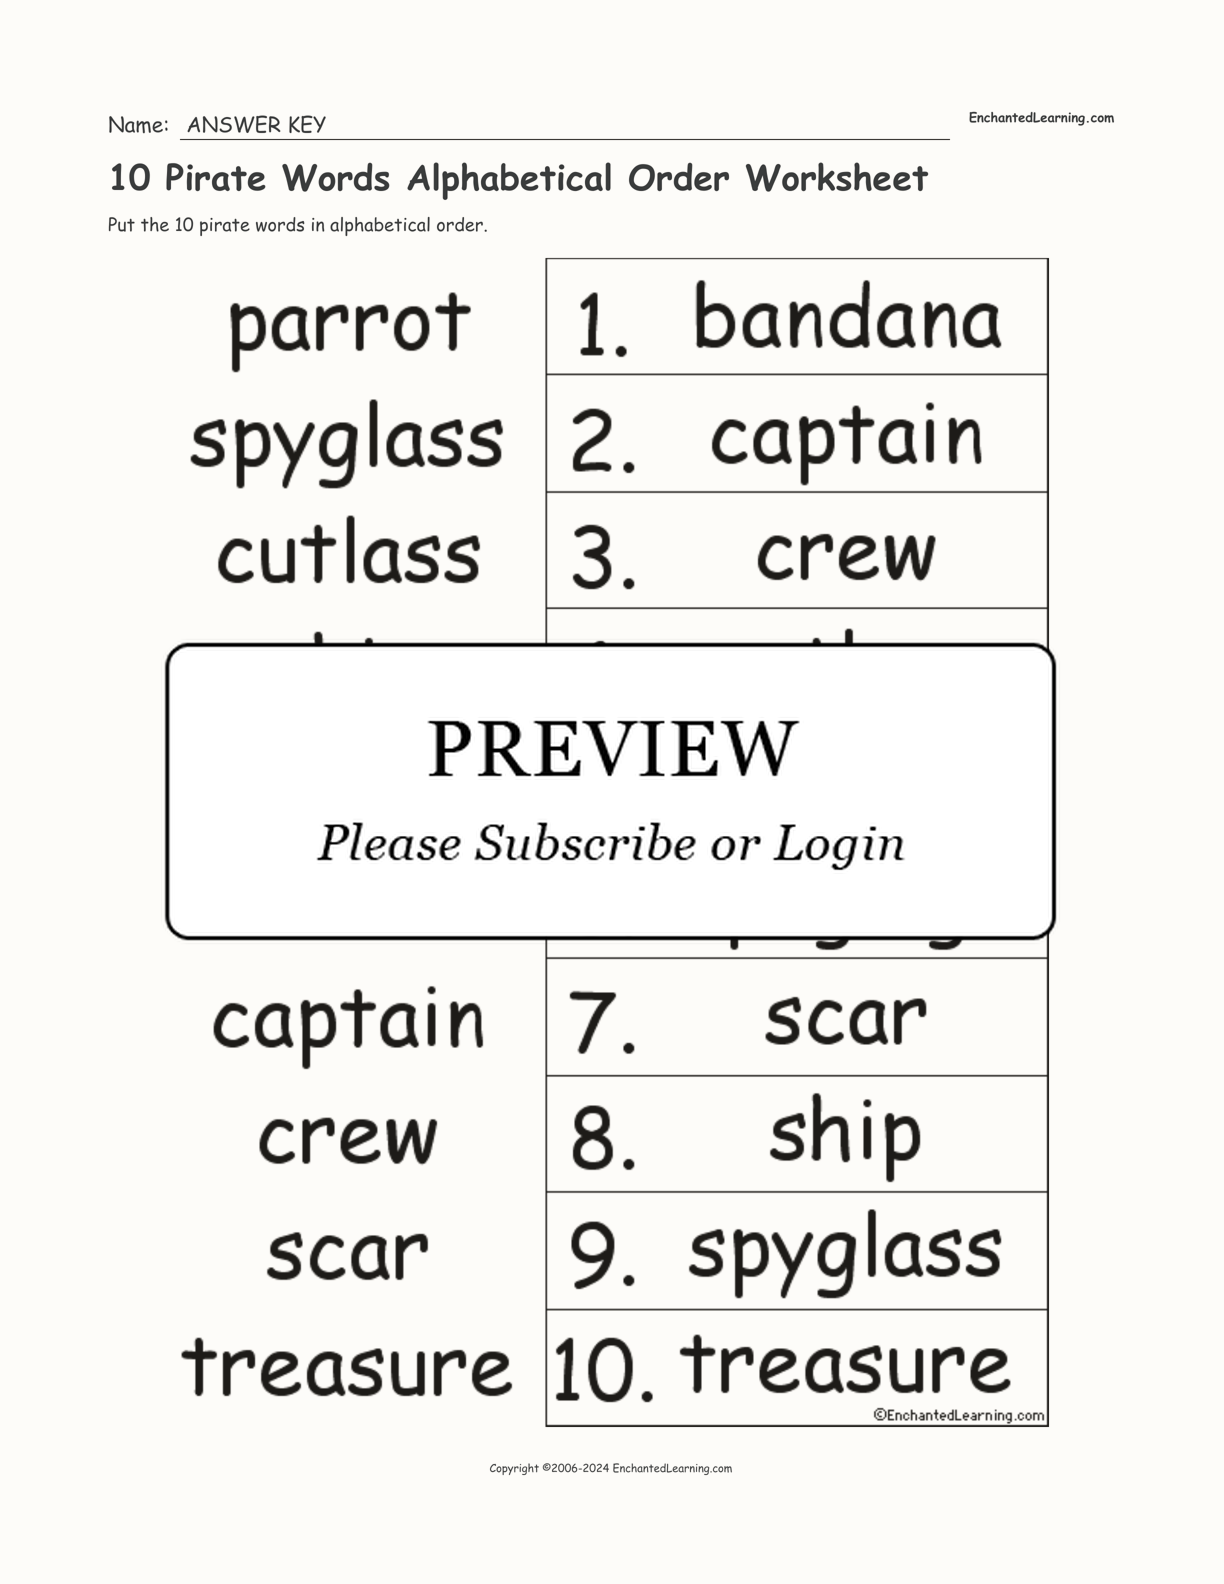 10 Pirate Words Alphabetical Order Worksheet interactive worksheet page 2